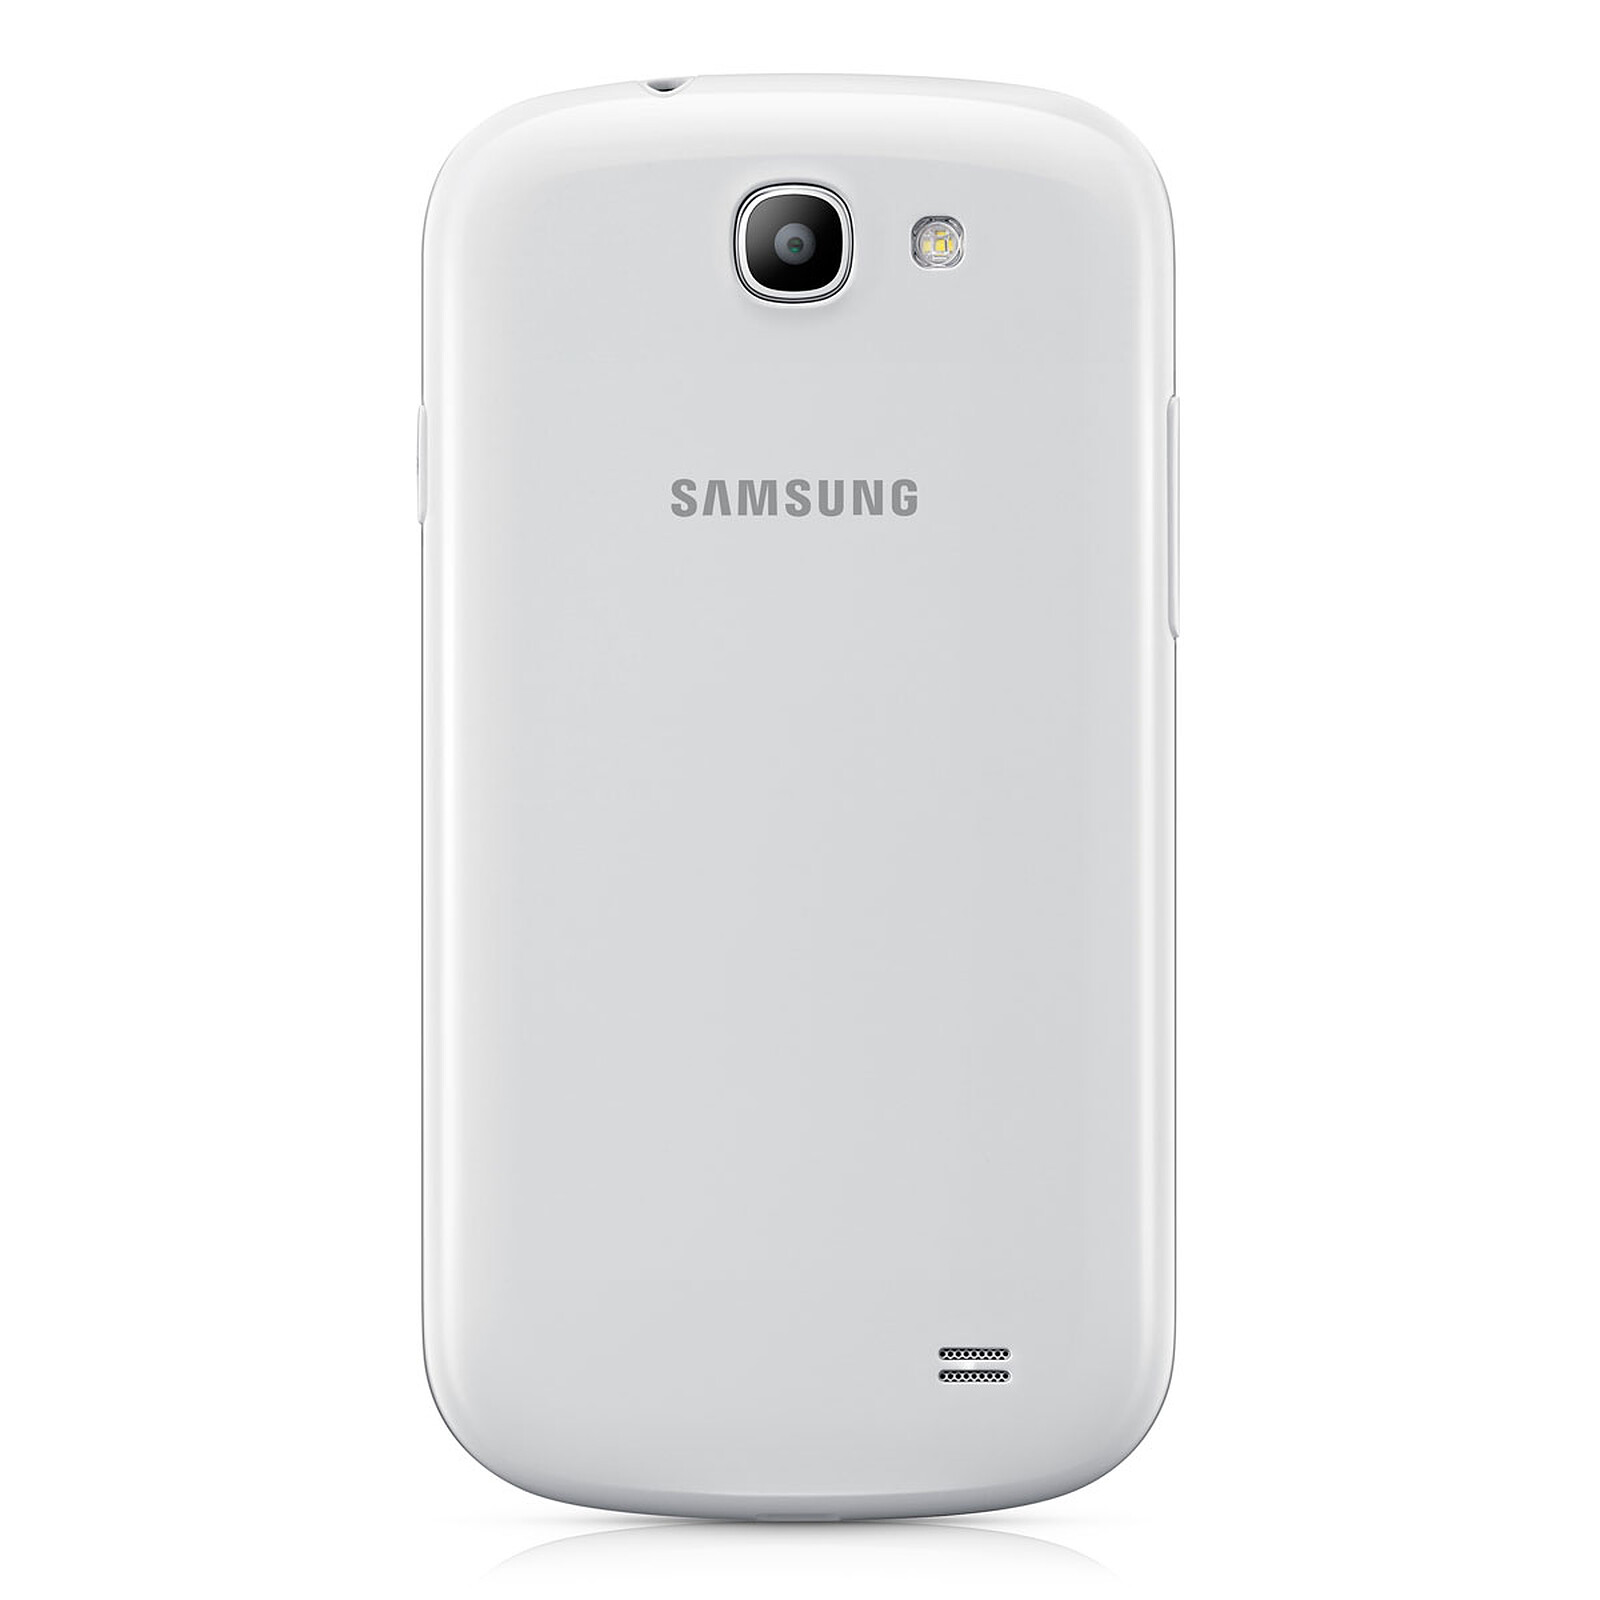 Samsung Galaxy Express GT-i8730 Blanc - Mobile & smartphone ...